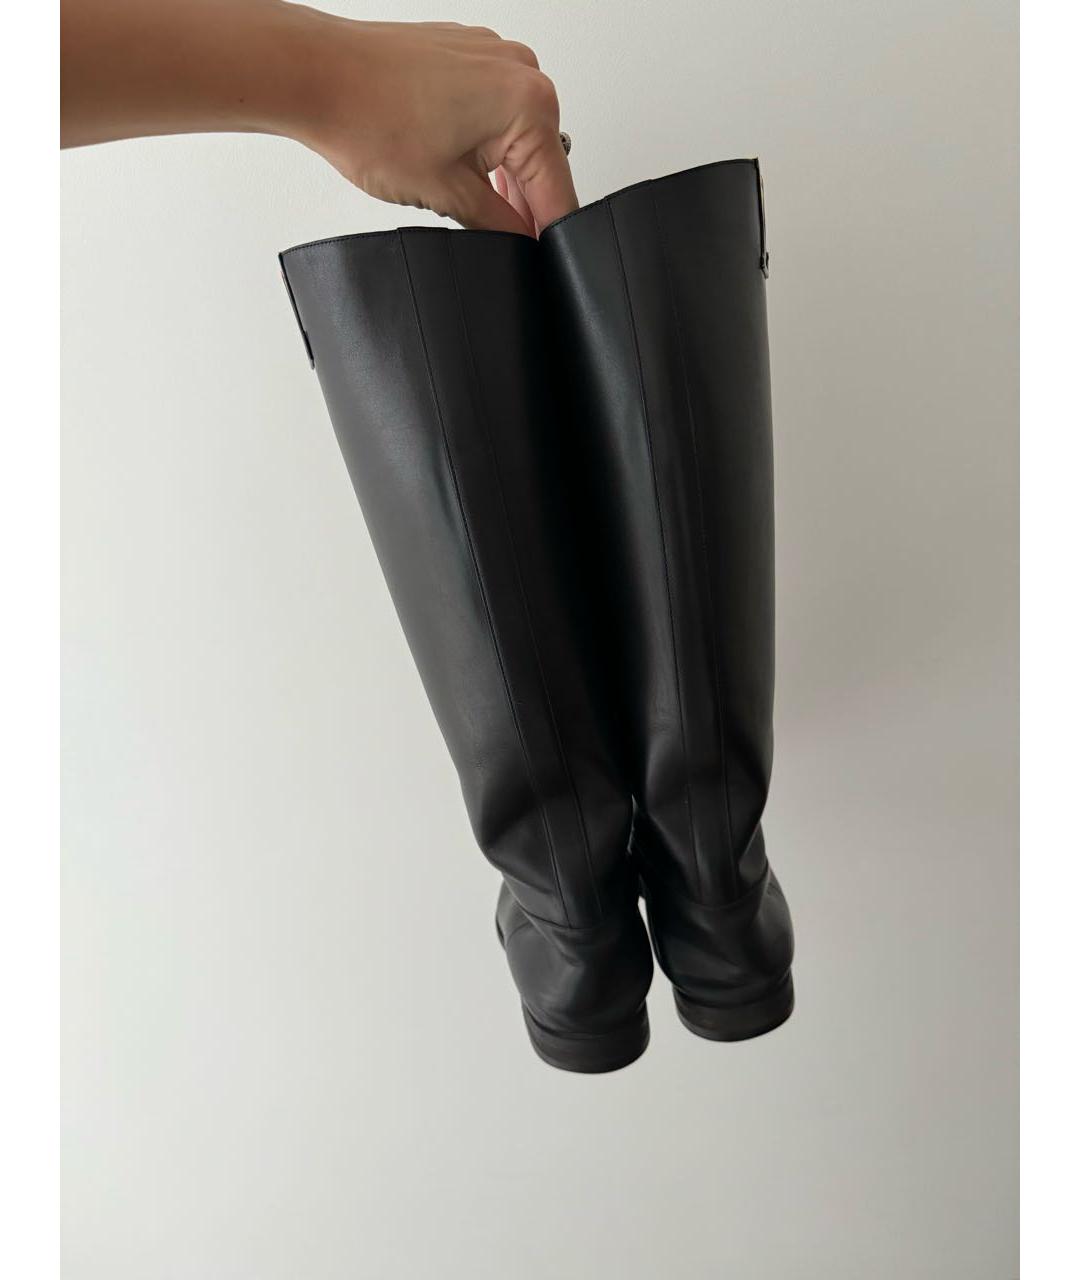 LOUIS VUITTON PRE-OWNED Черные кожаные сапоги, фото 2